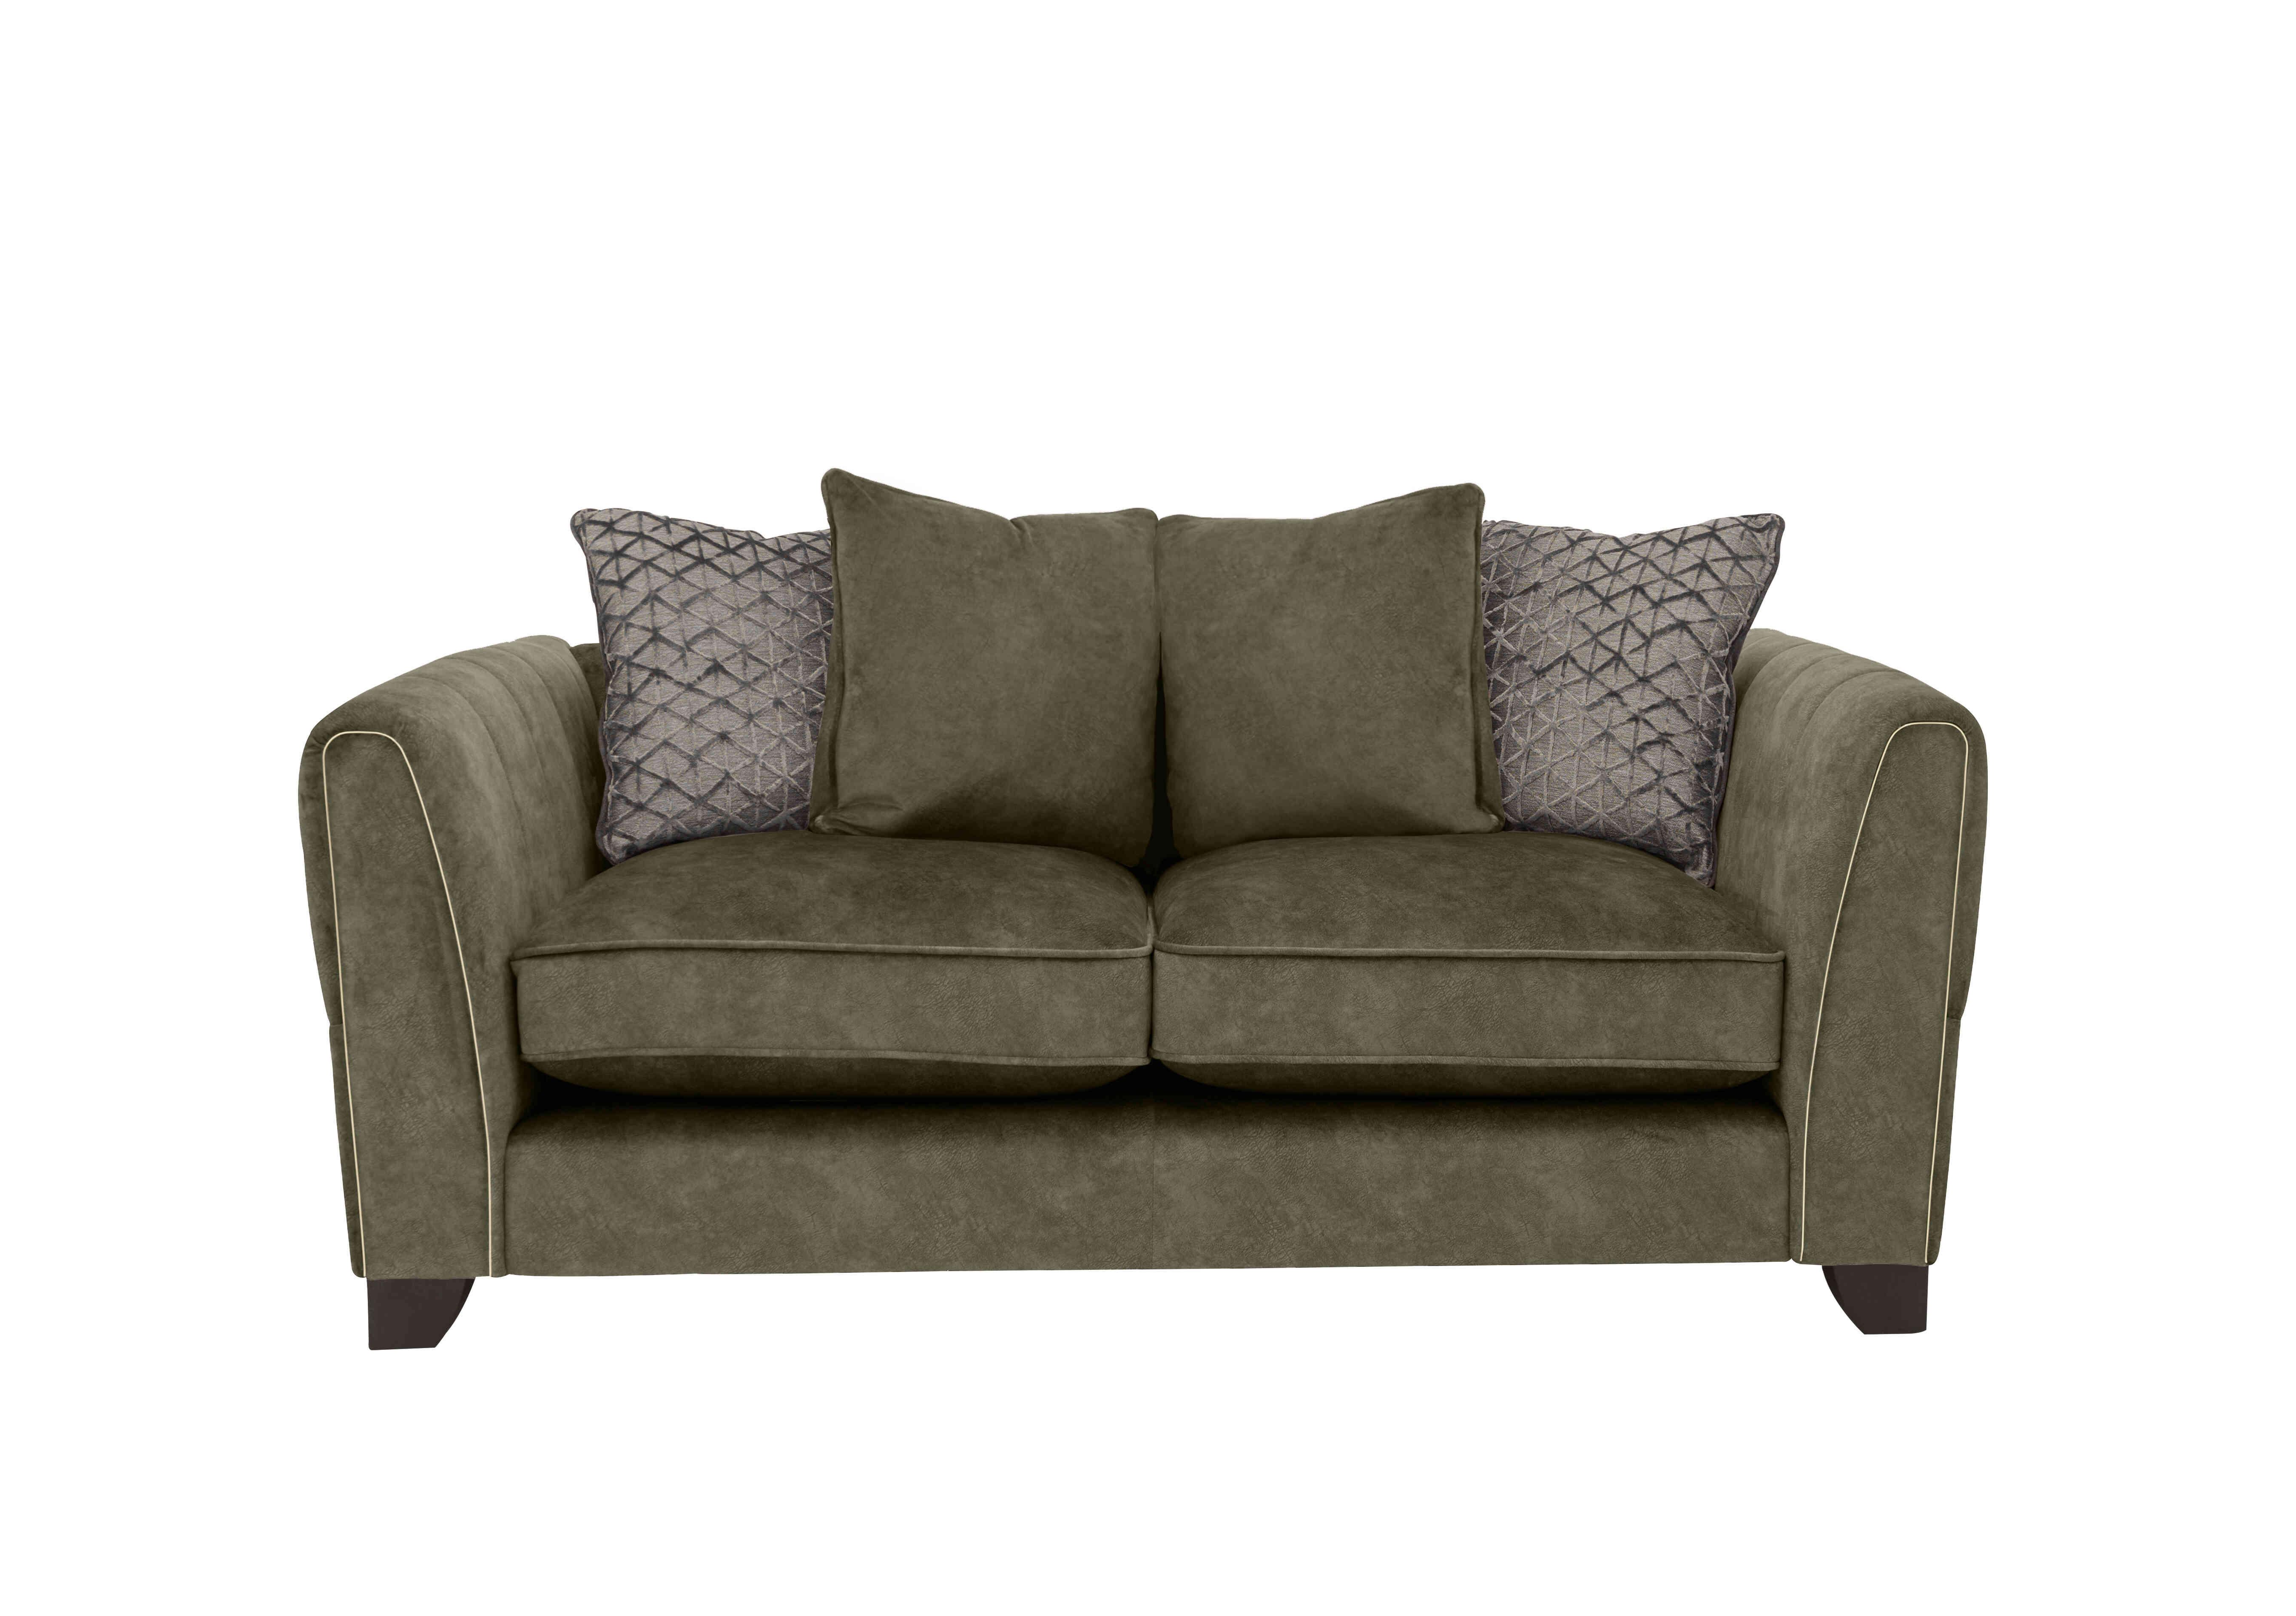 Ariana 2 Seater Fabric Pillow Back Sofa in Dapple Sage Brass Insert on Furniture Village